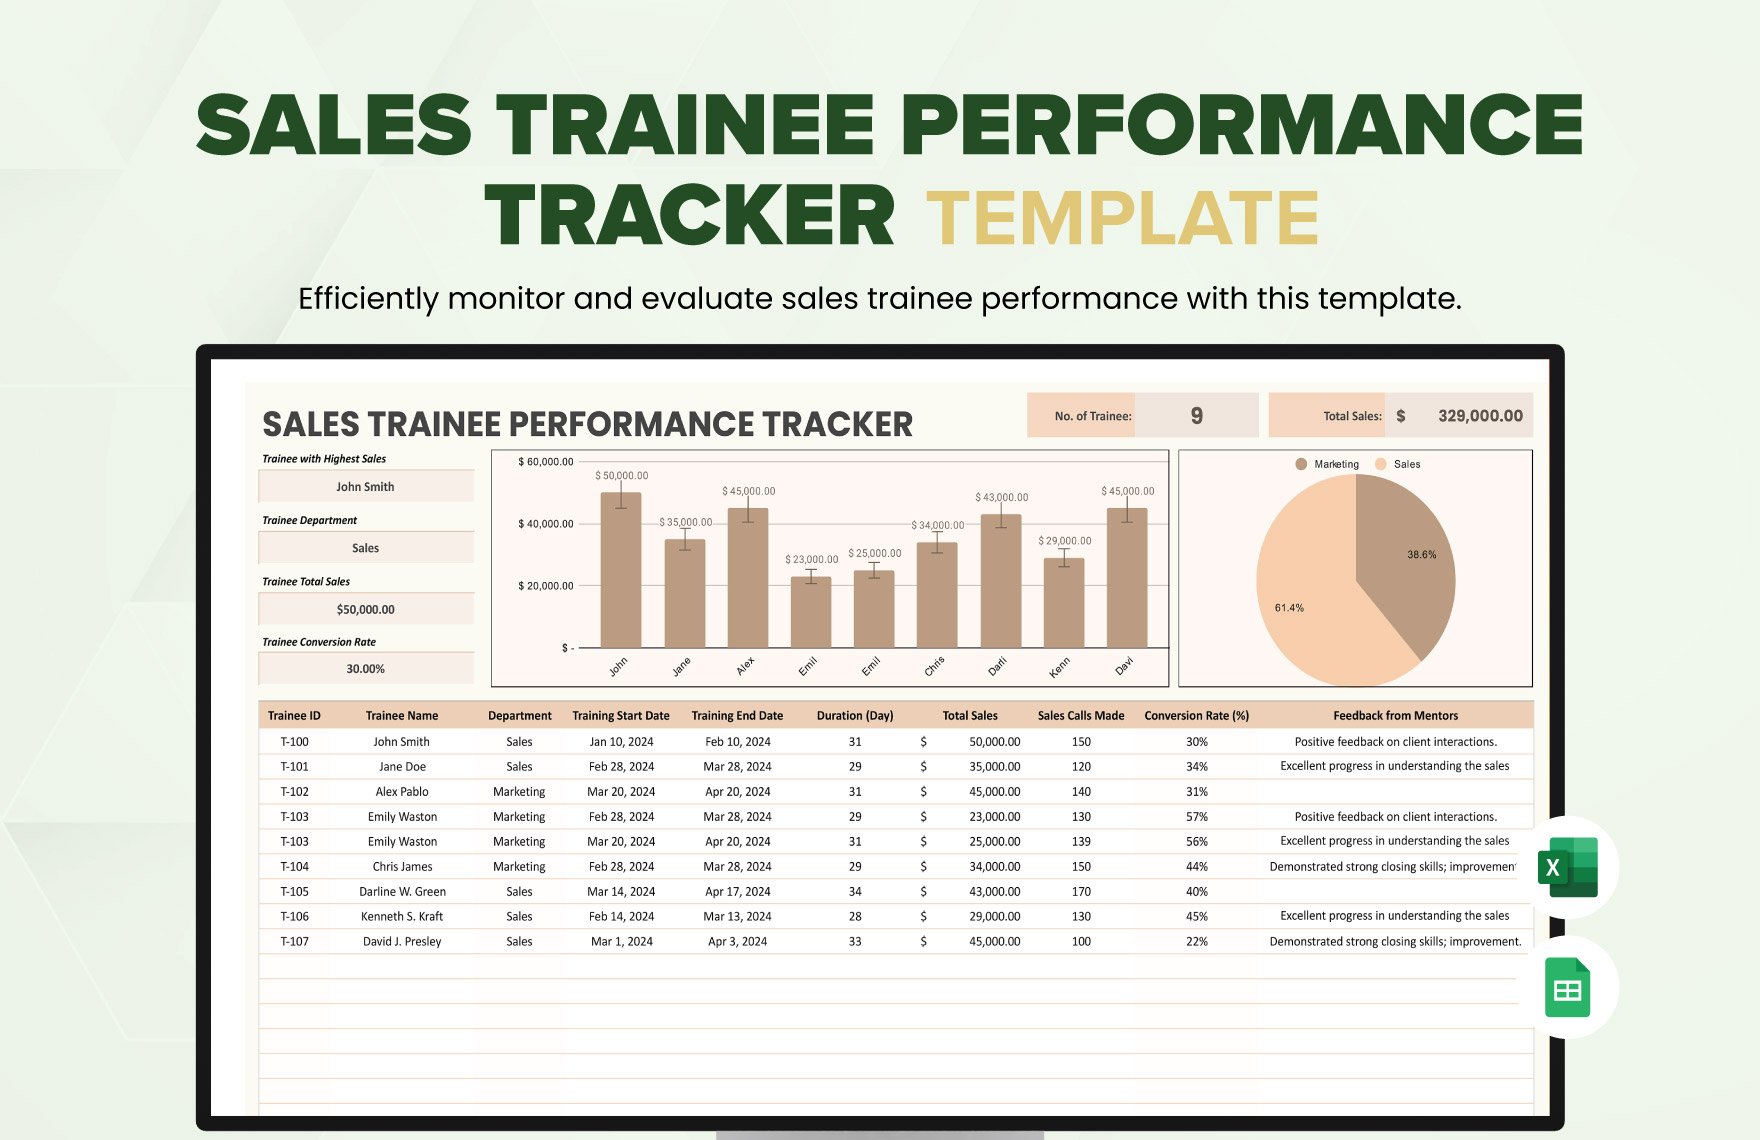 Sales Trainee Performance Tracker Template